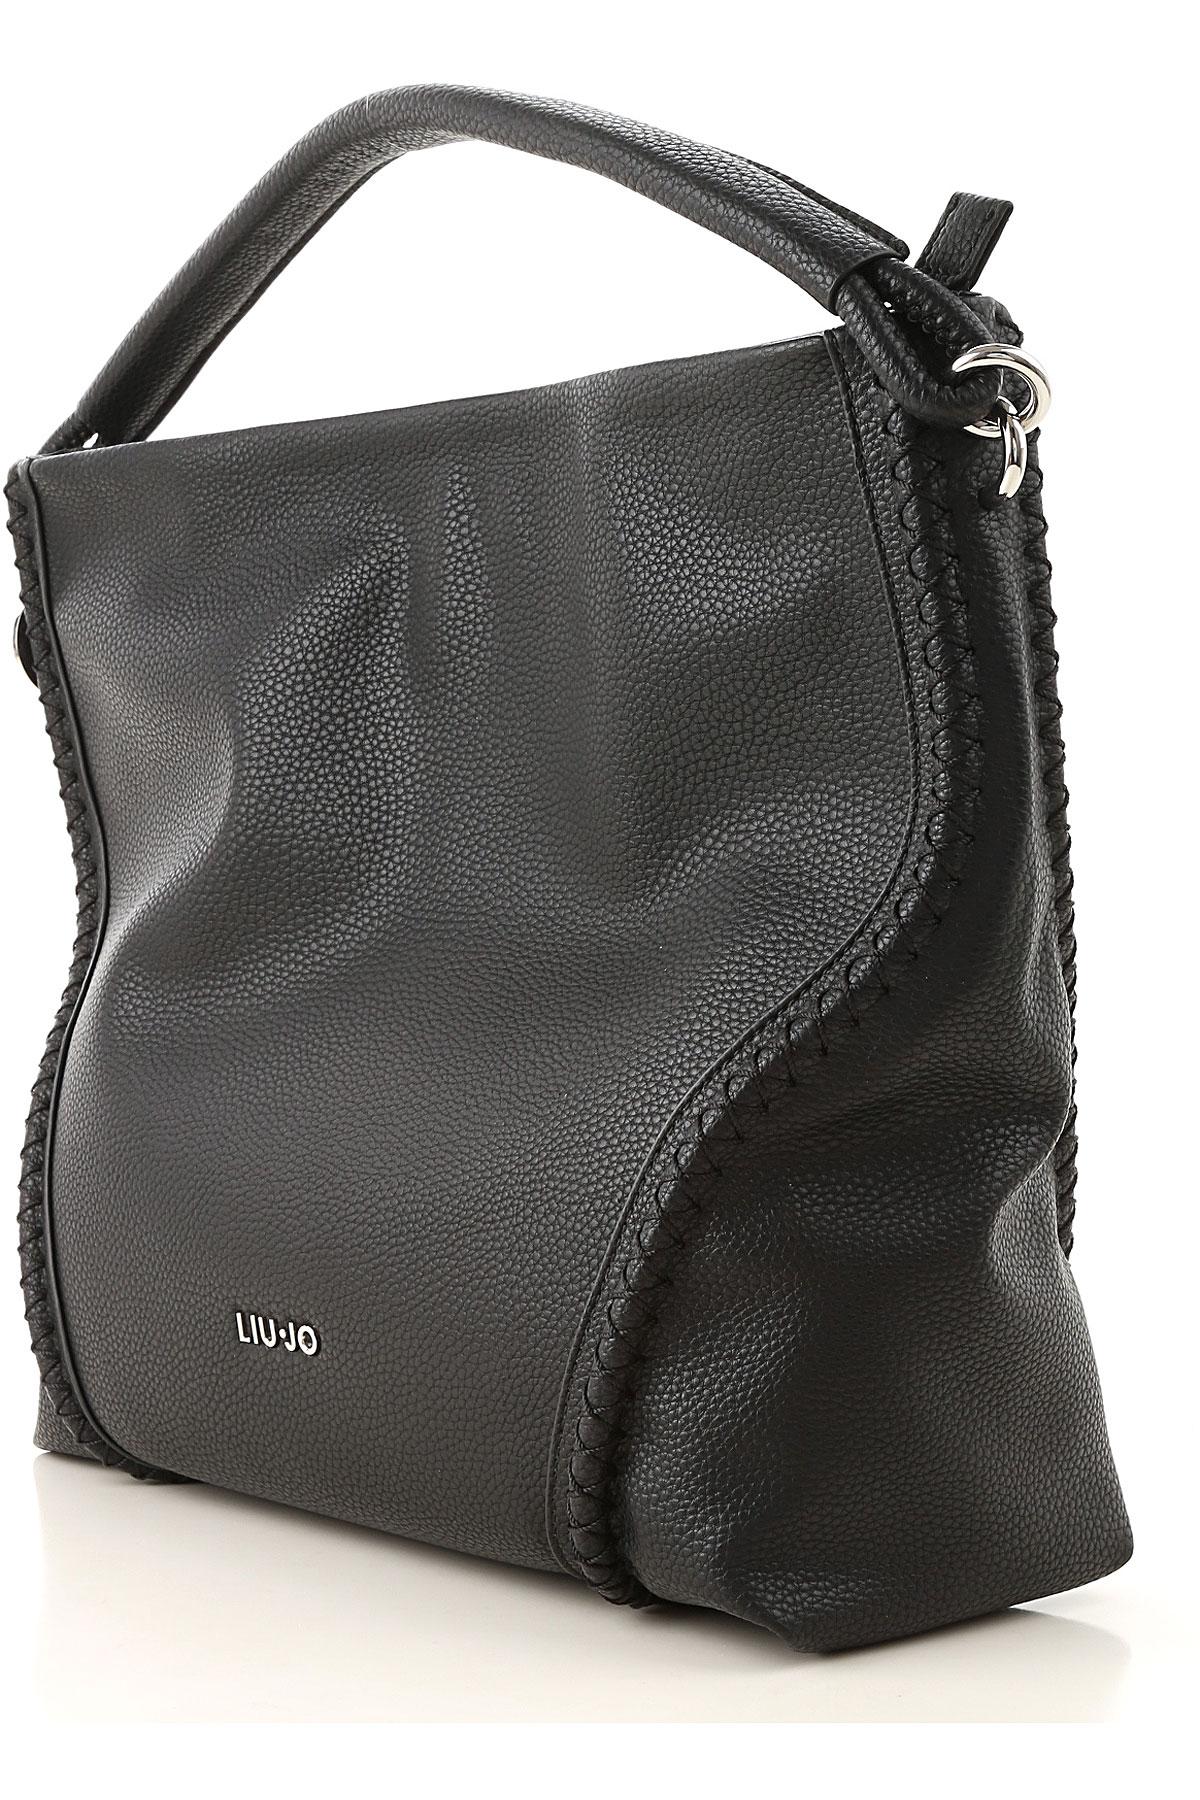 Liu Jo Tote Bag On Sale in Black - Lyst